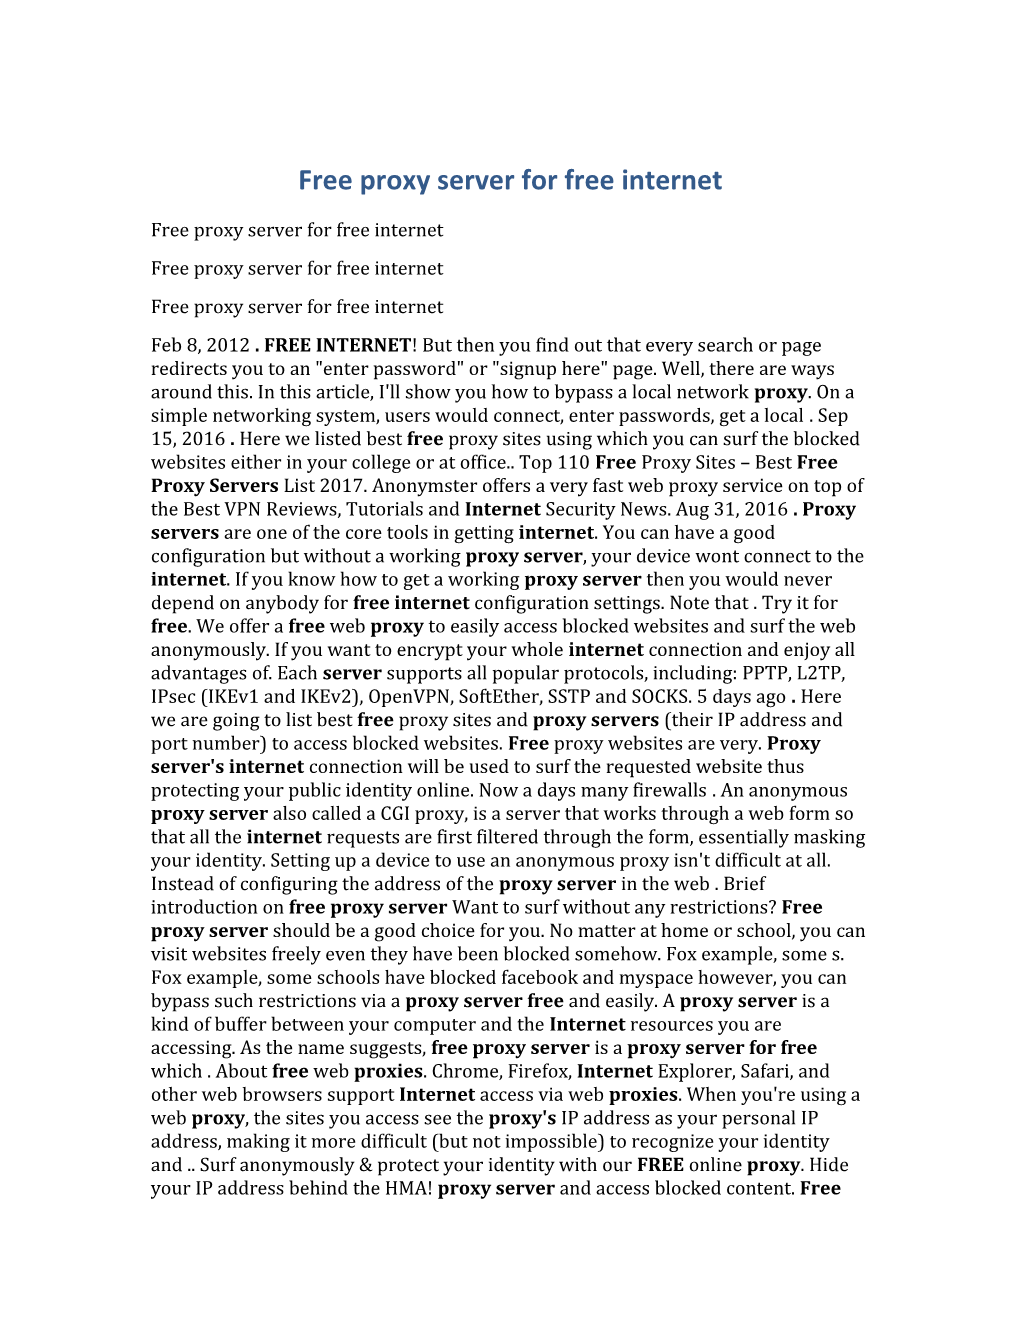 Free Proxy Server for Free Internet